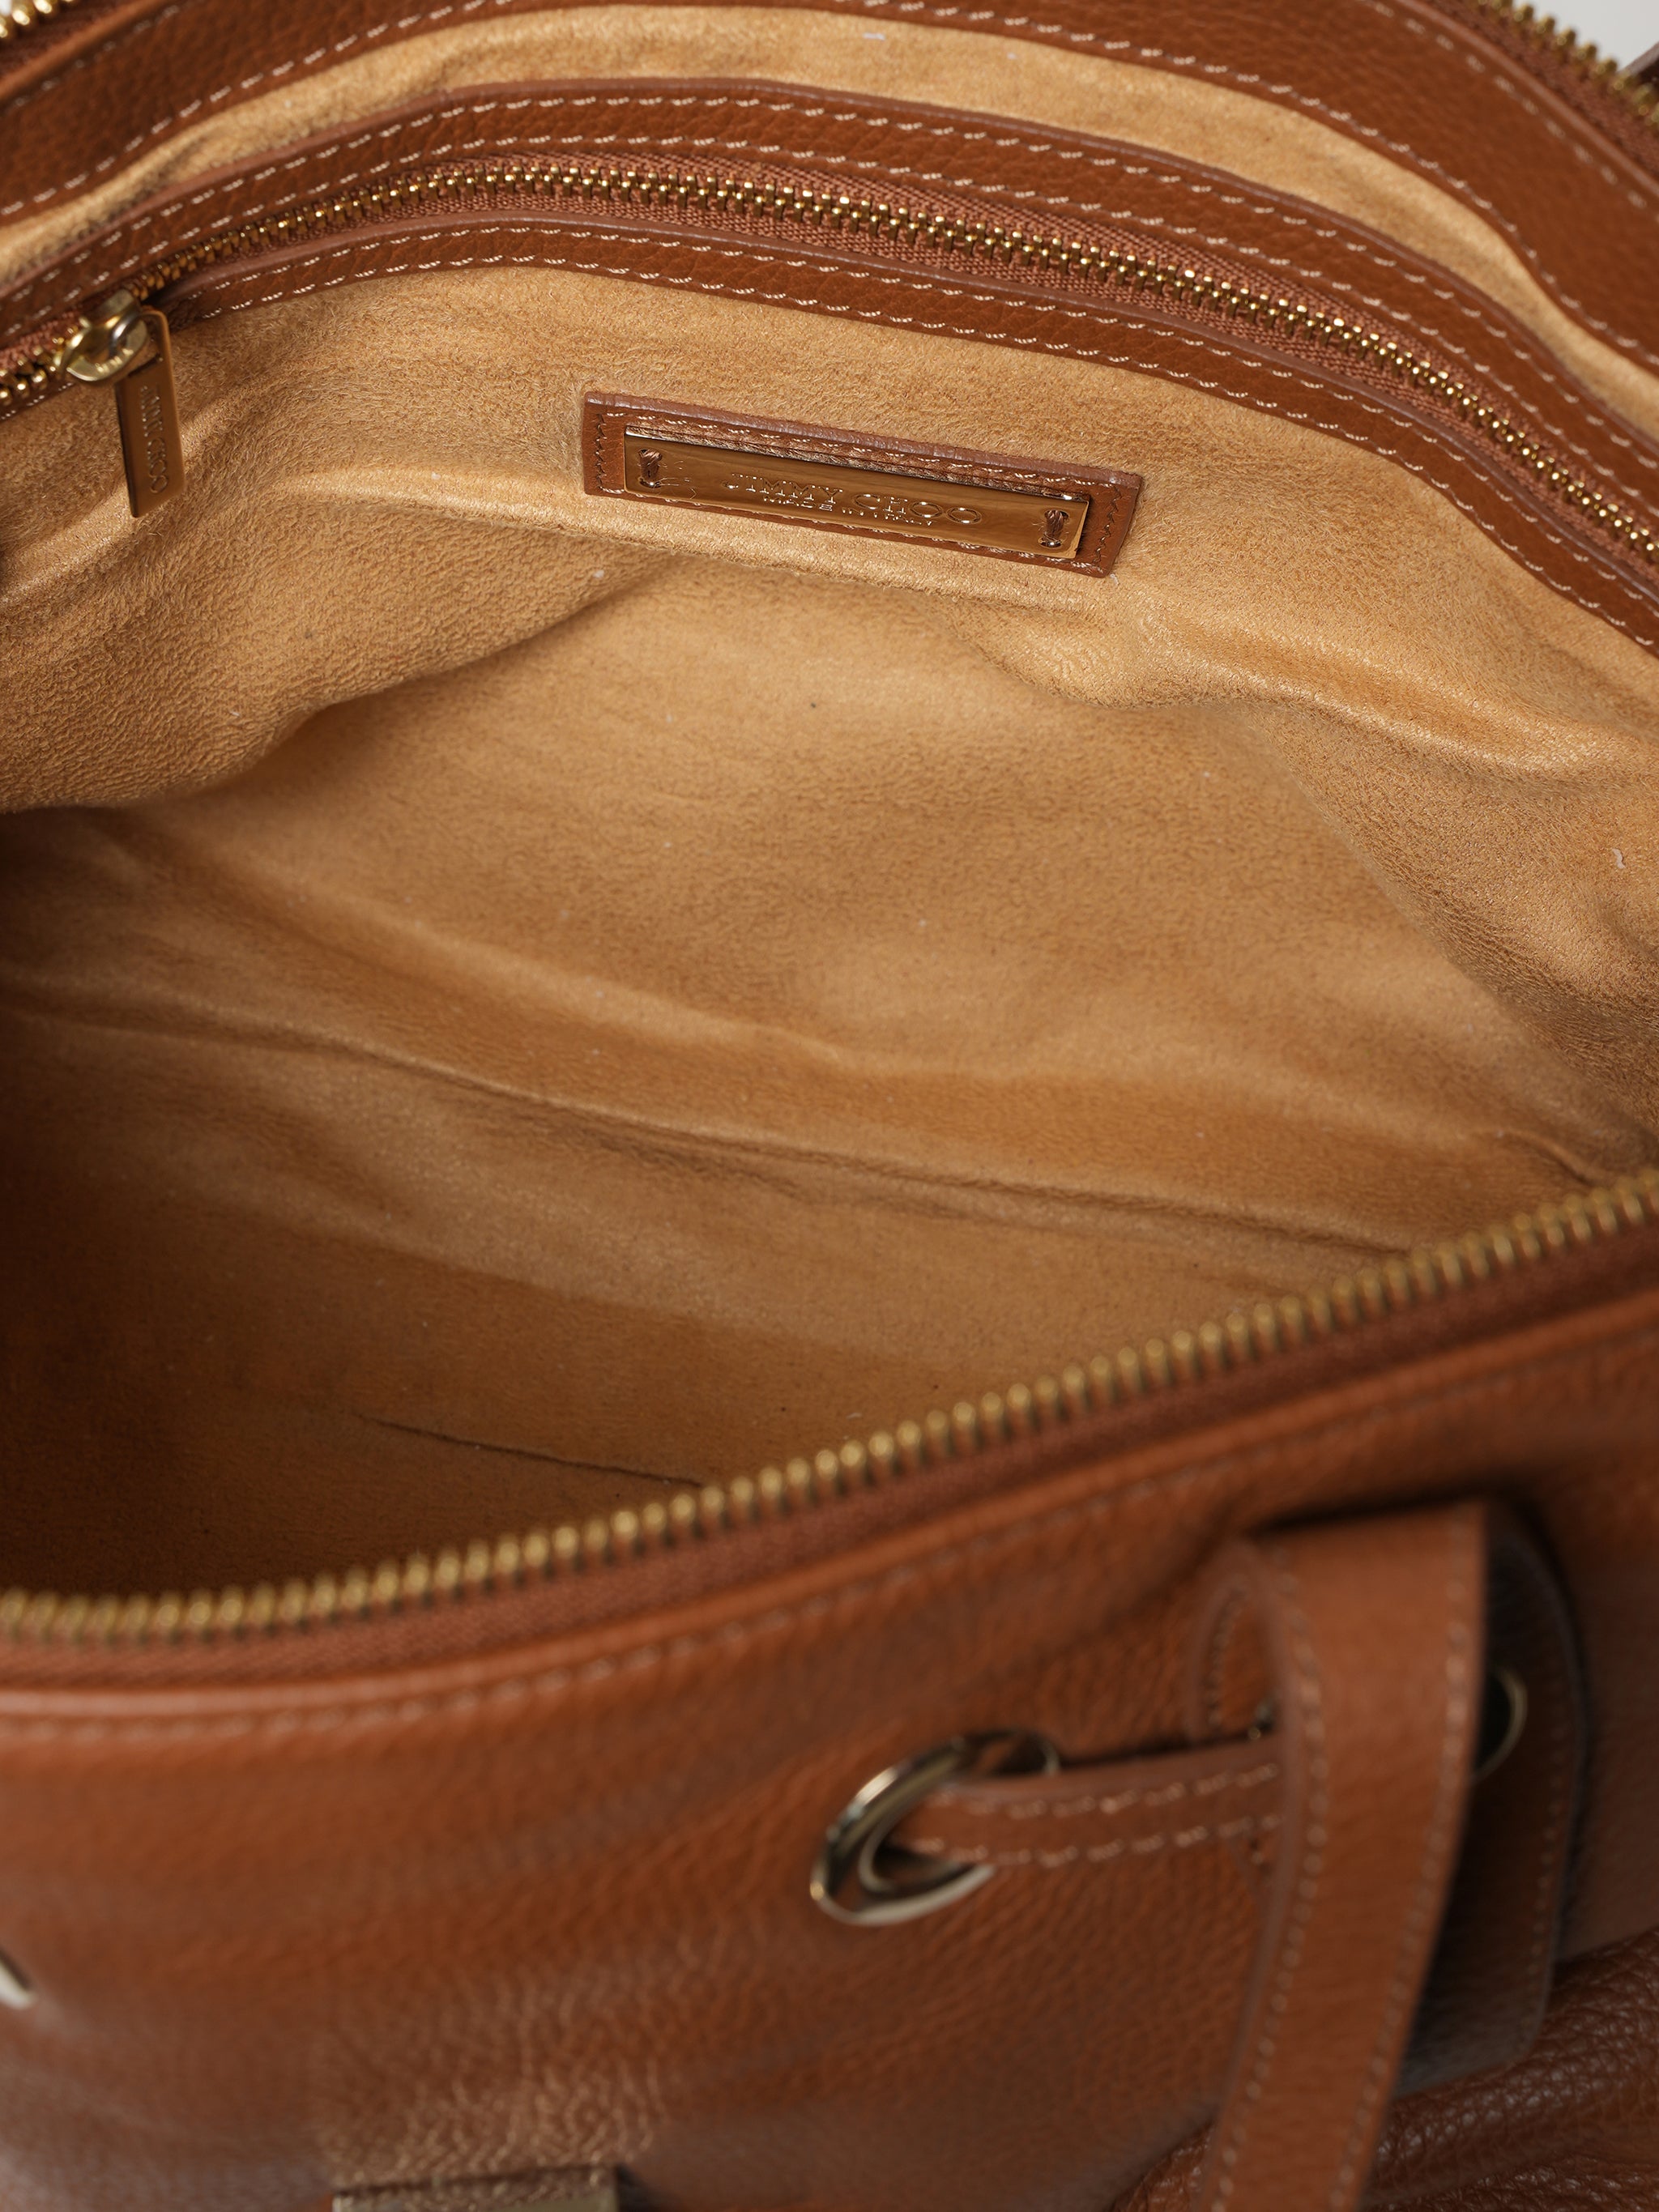 GenesinlifeShops | Jimmy Choo 'Avenue Mini' leather shoulder bag | Women's  Bags | large Essex tote bag Rosa